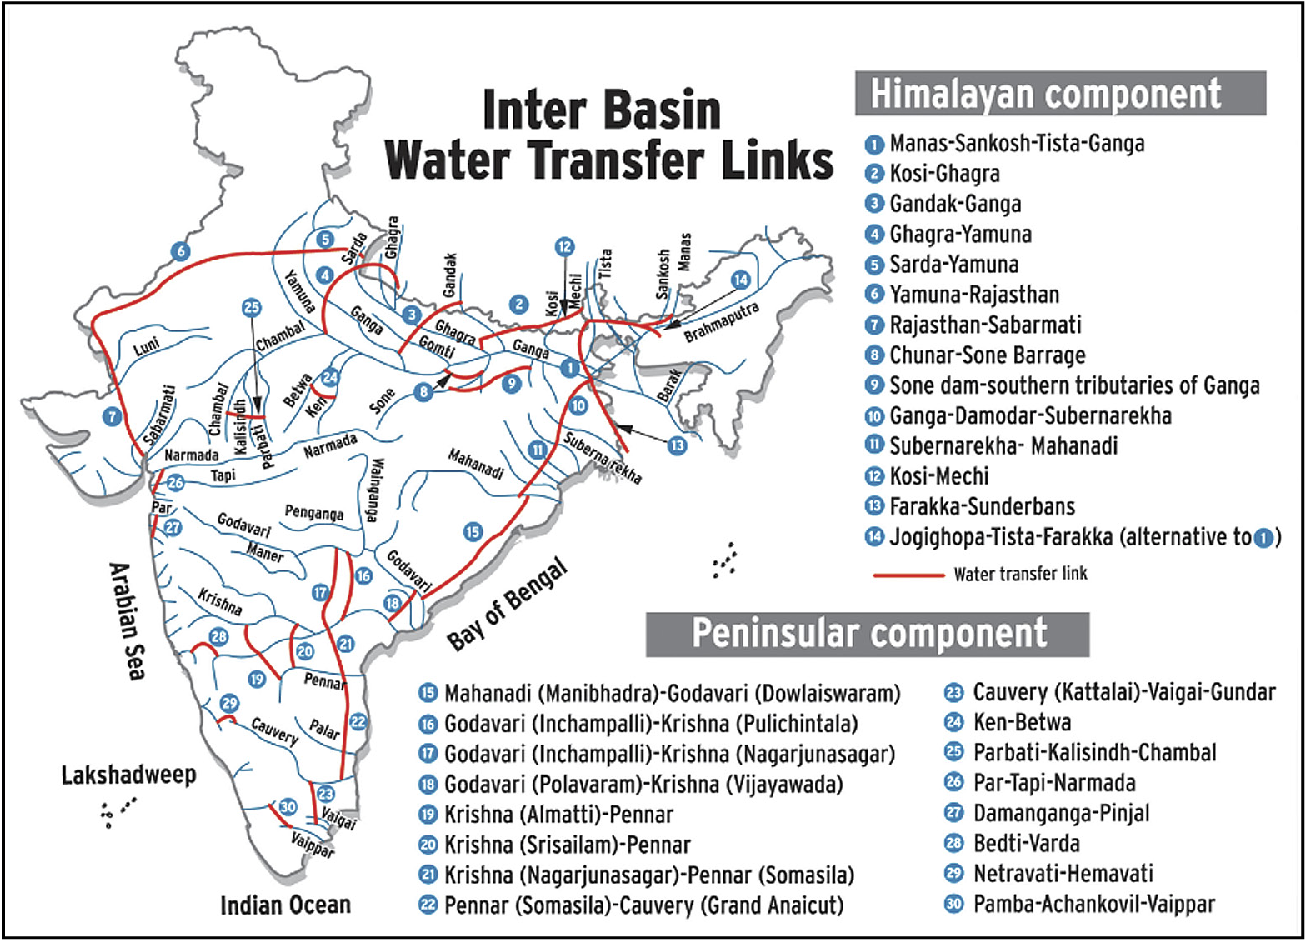 Inter Basin Water Transfer Links